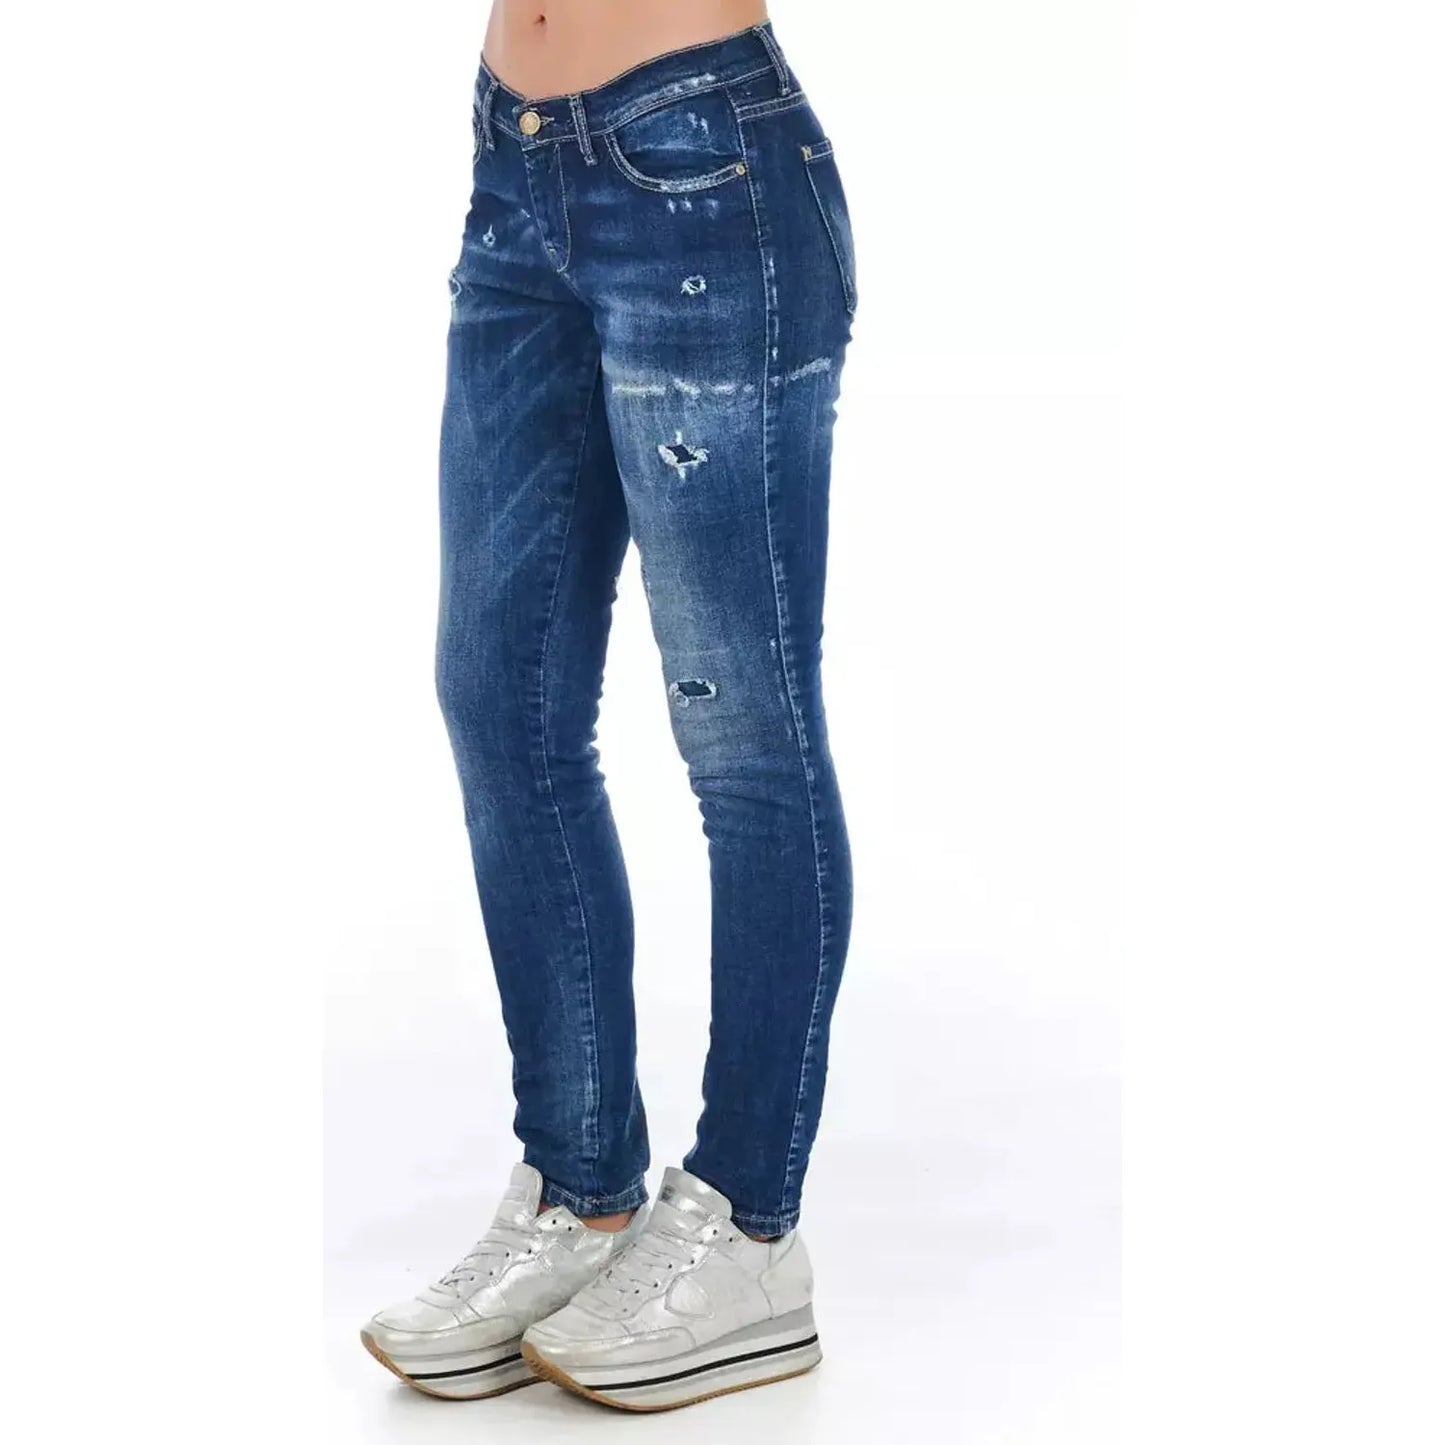 Frankie Morello Chic Worn Wash Skinny Denim Jeans blue-cotton-jeans-pant-52 stock_product_image_21764_182490875-22-fa9791b9-933.webp